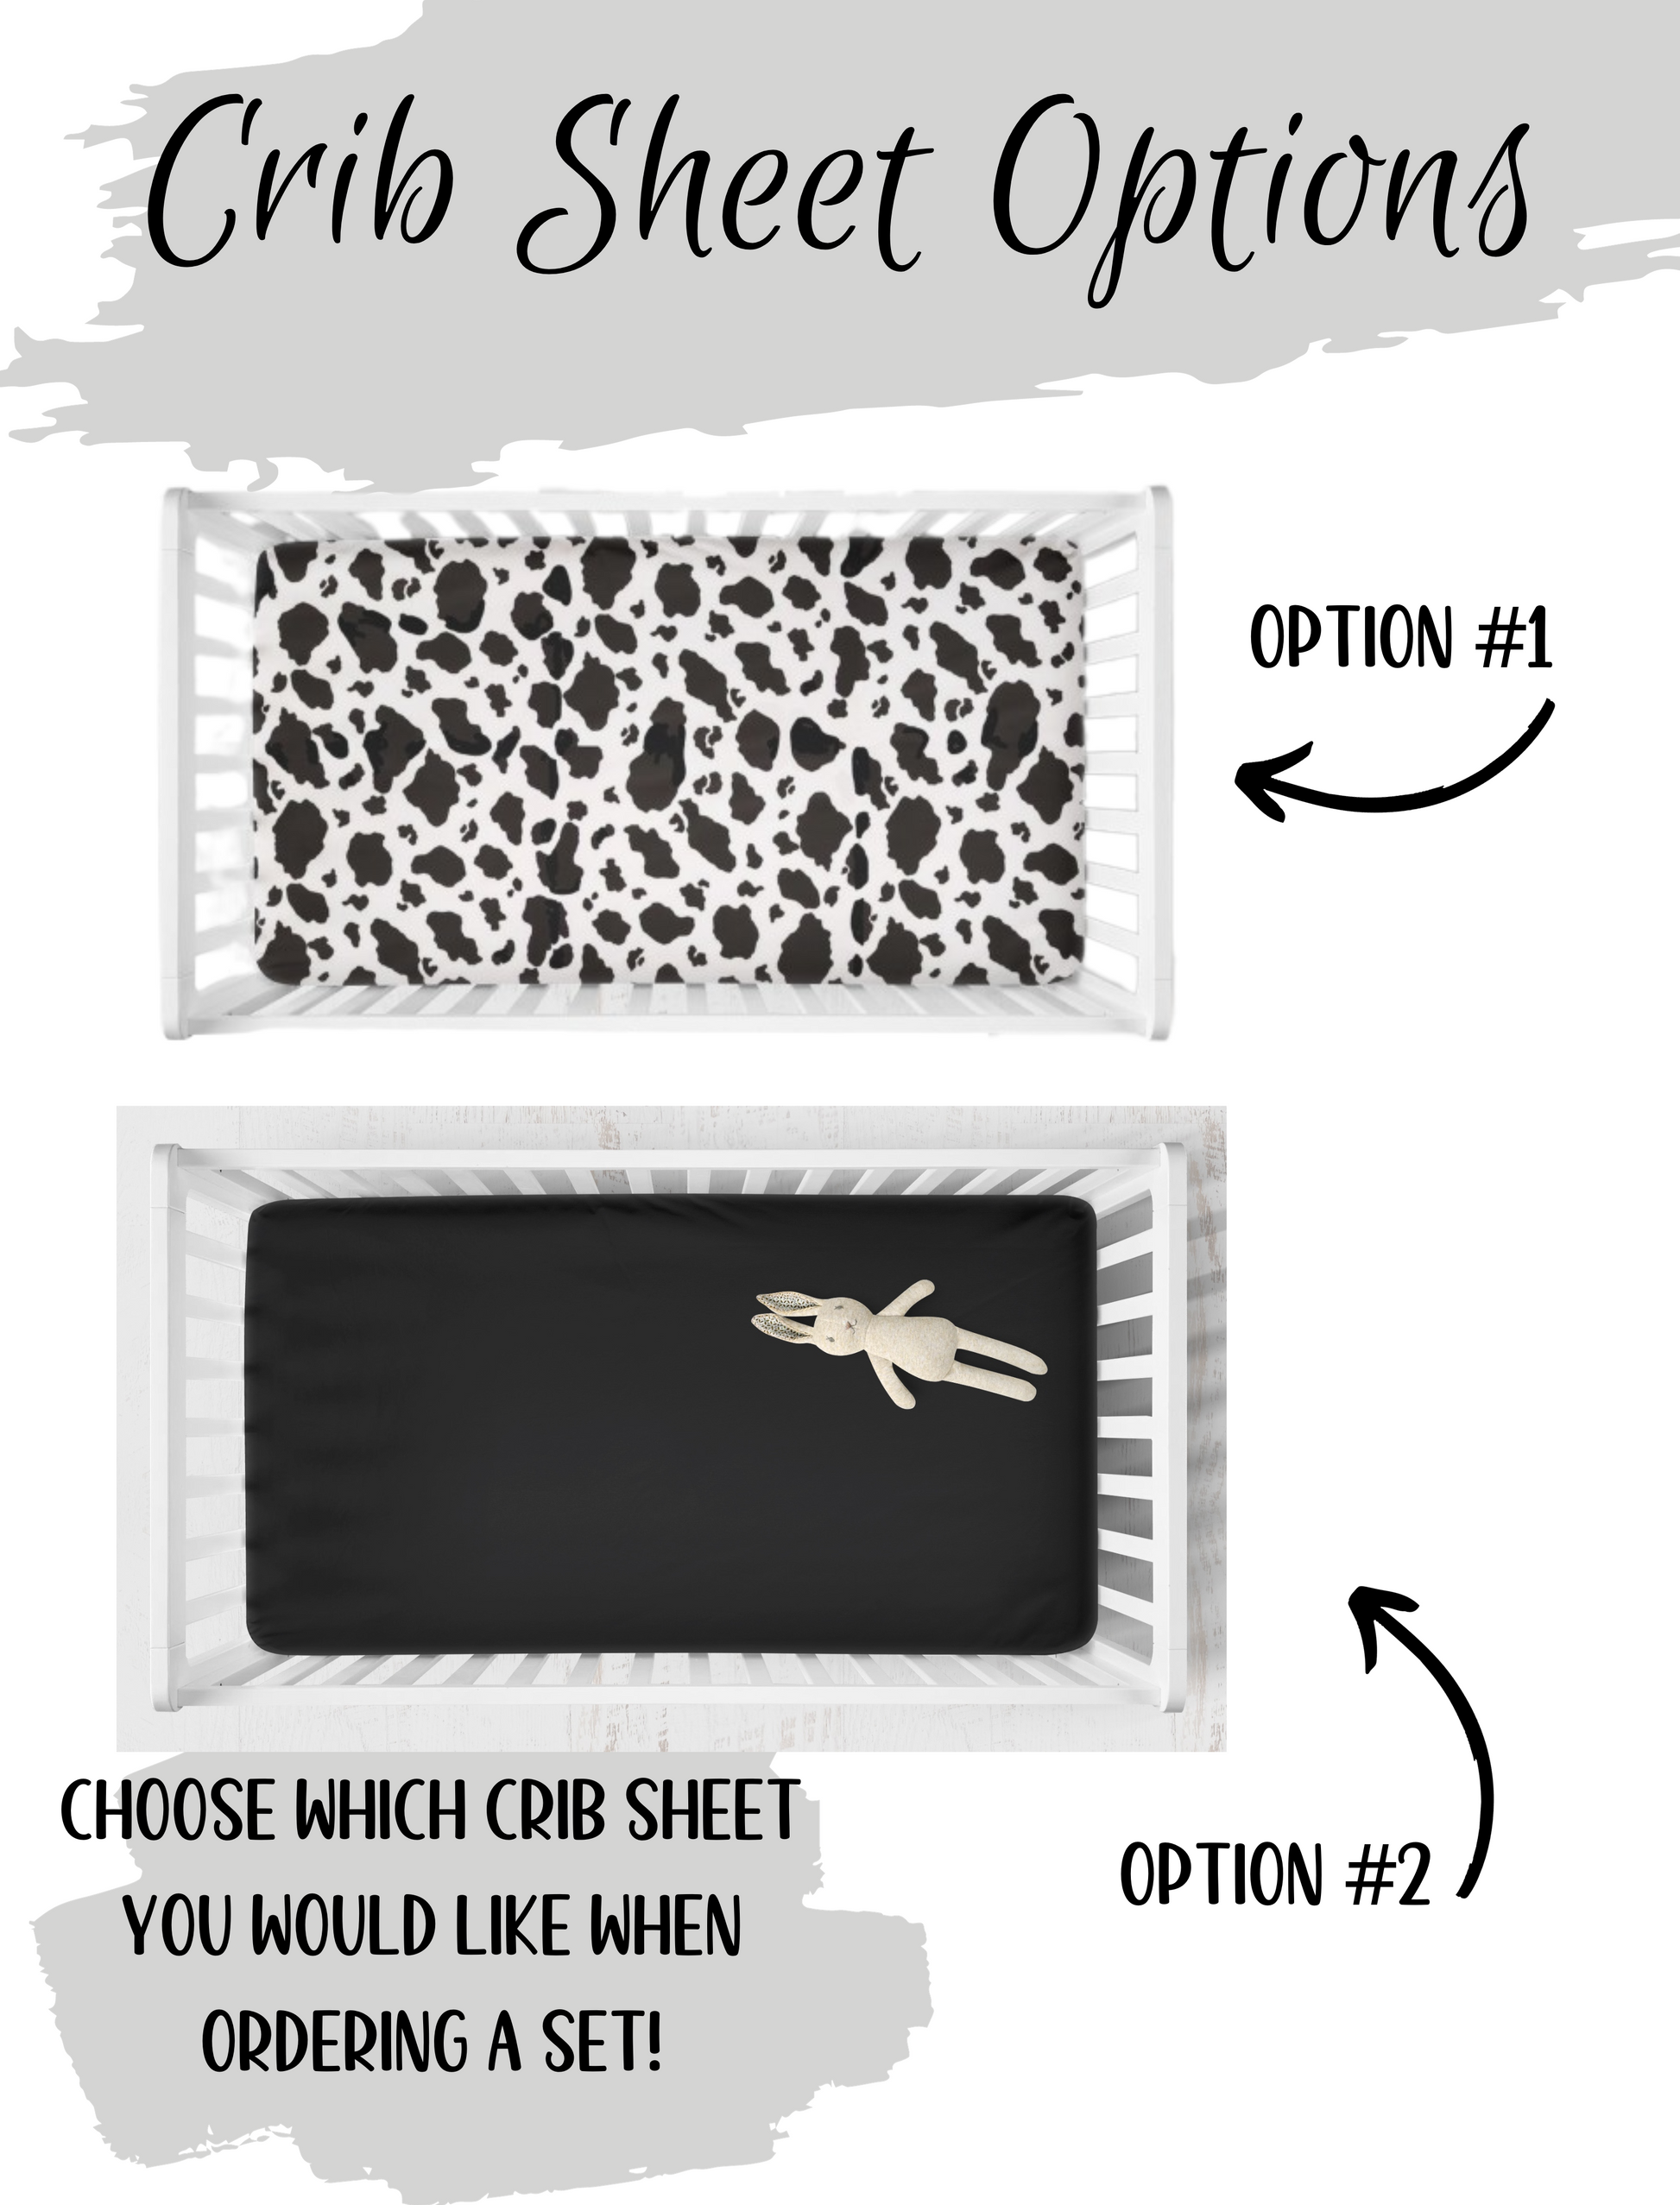 pick your crib sheet - cow print crib sheet or black crib sheet